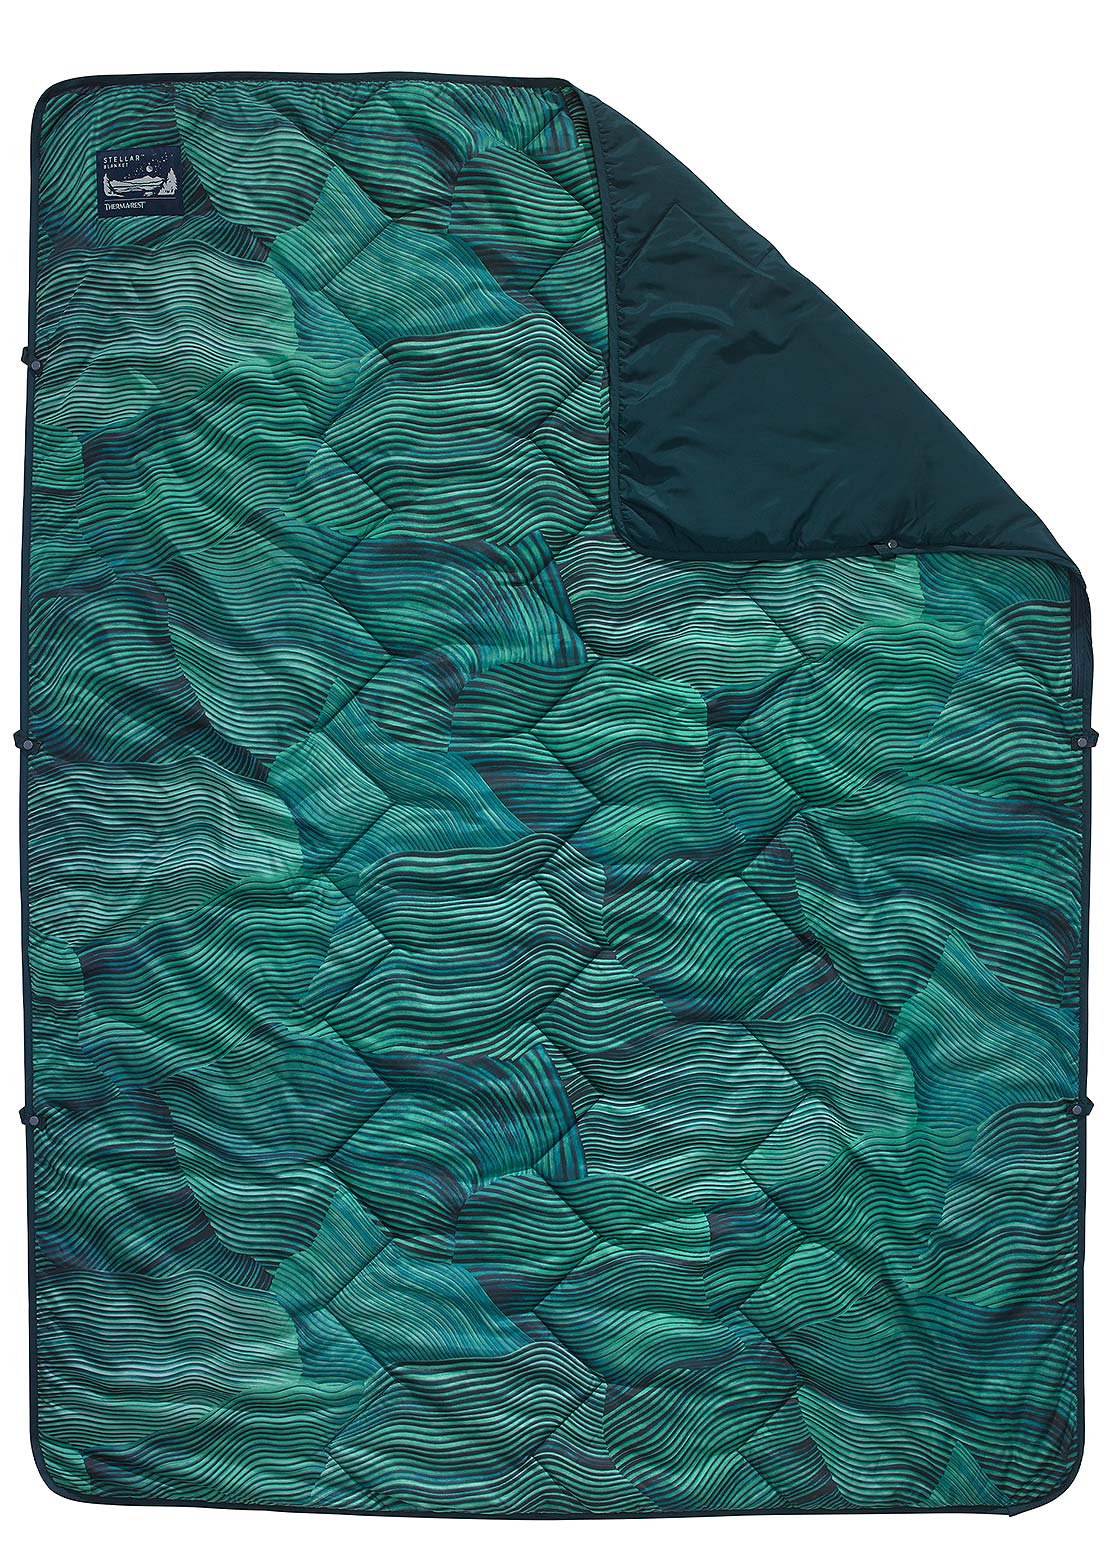 Therm-A-Rest Stellar Blanket Green Wave Print